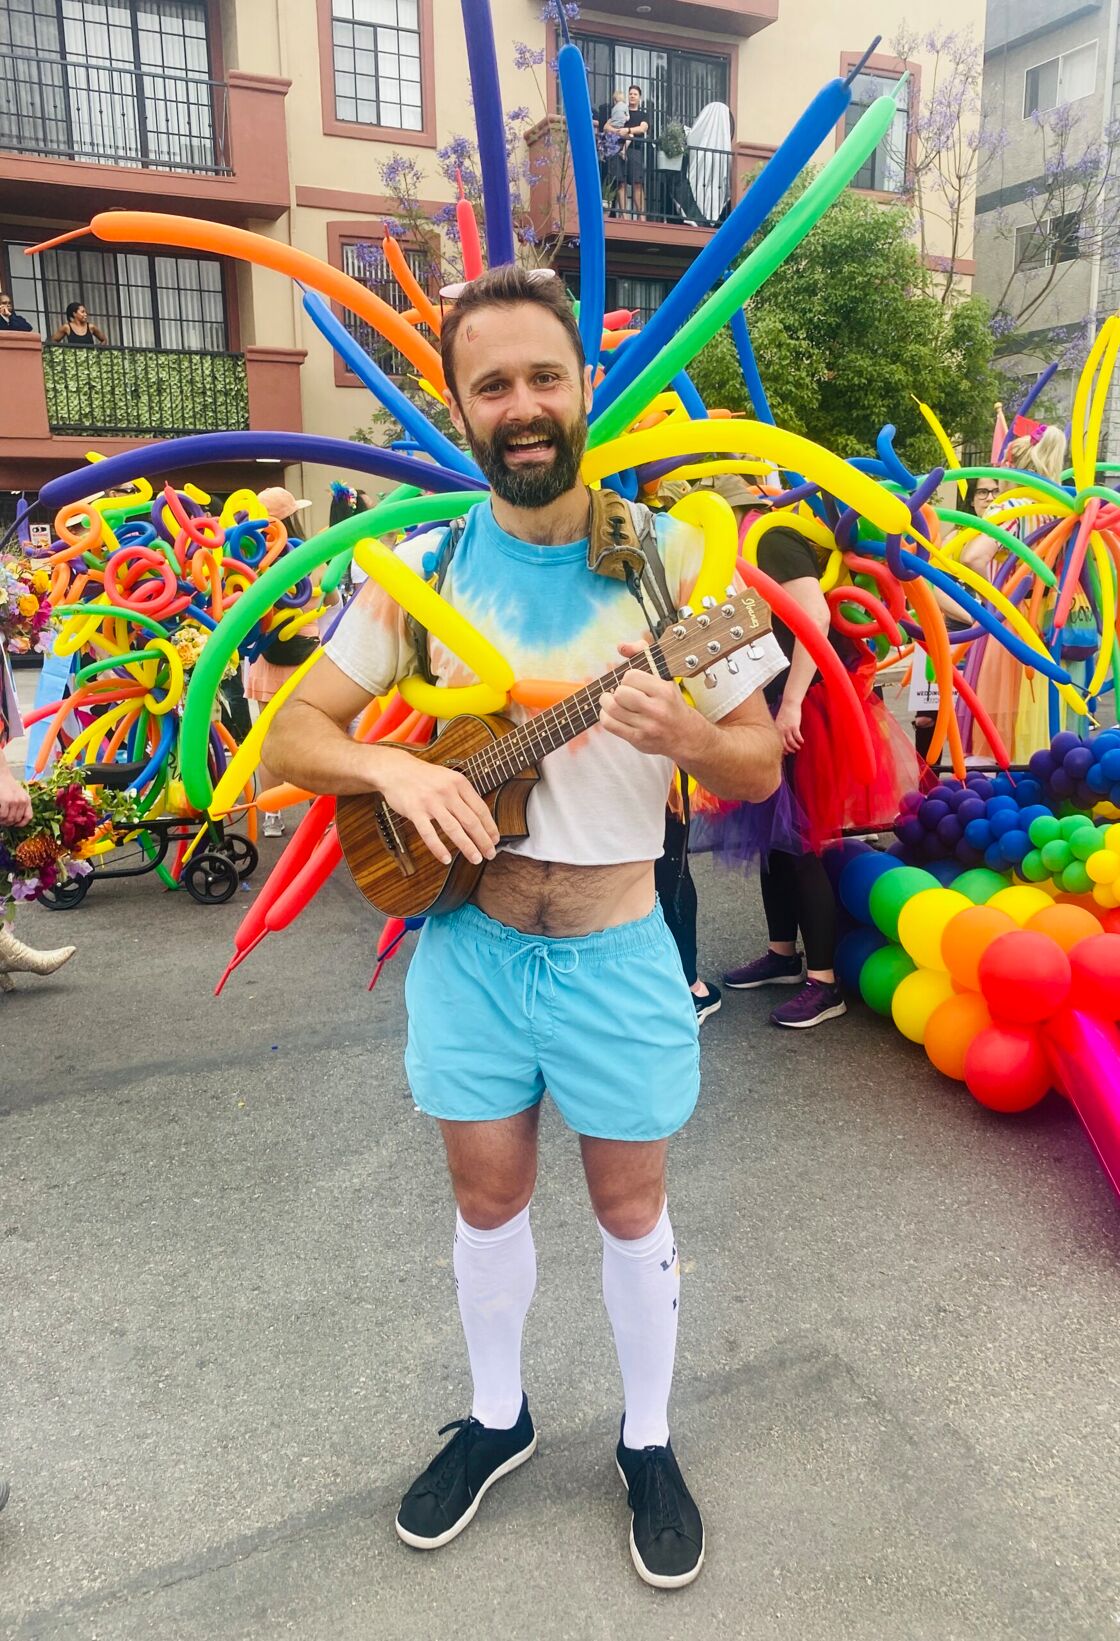 Pride Parade uke player